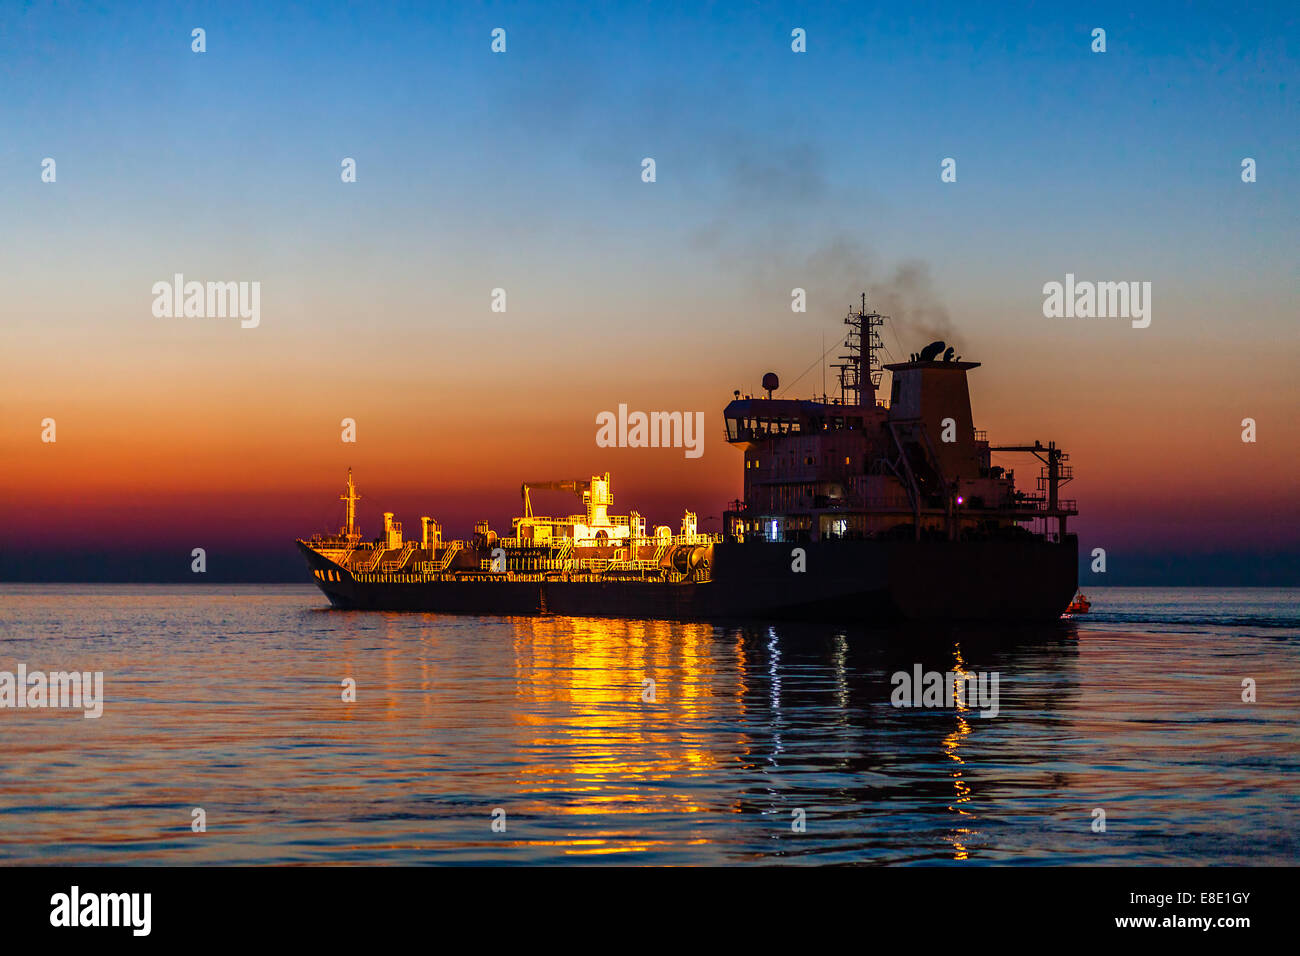 Ship swims on the sea at night. Stock Photo